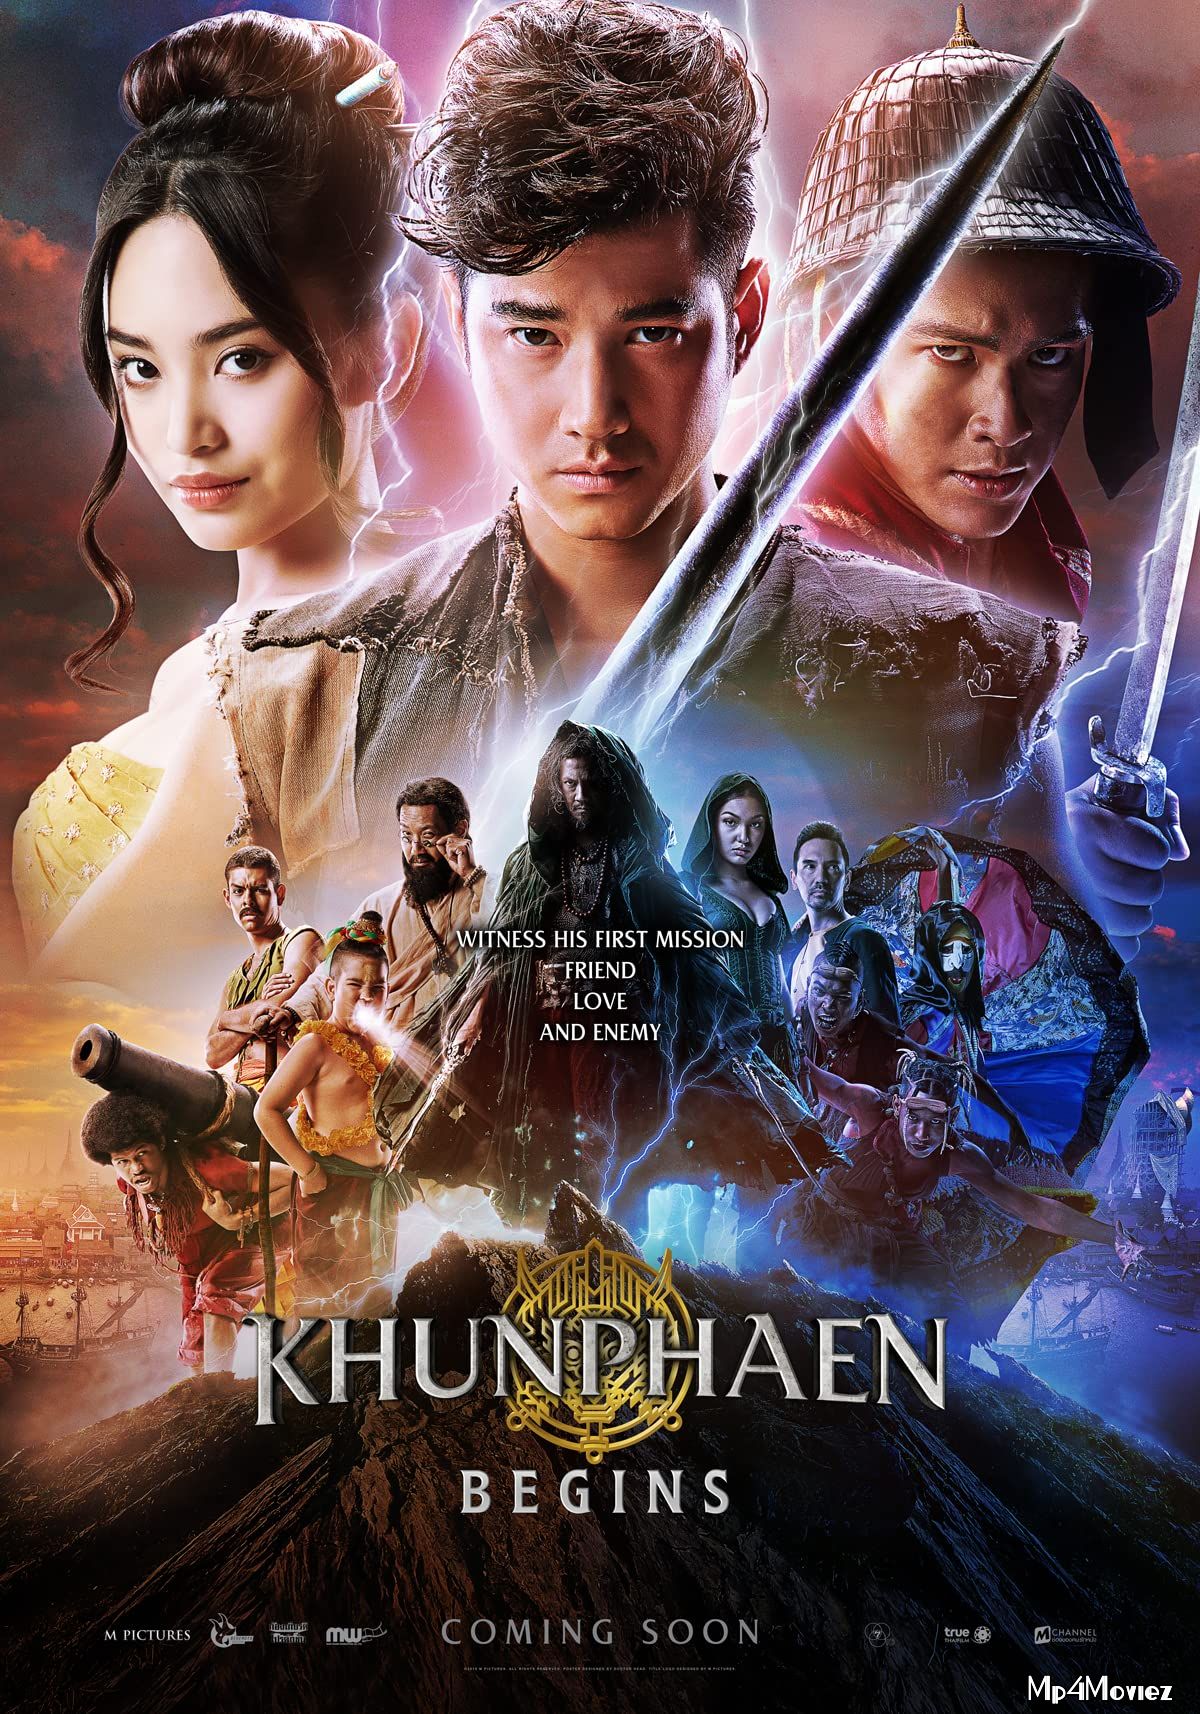 Khun Phaen Begins (2019) Hindi Dubbed UNCUT HDRip download full movie